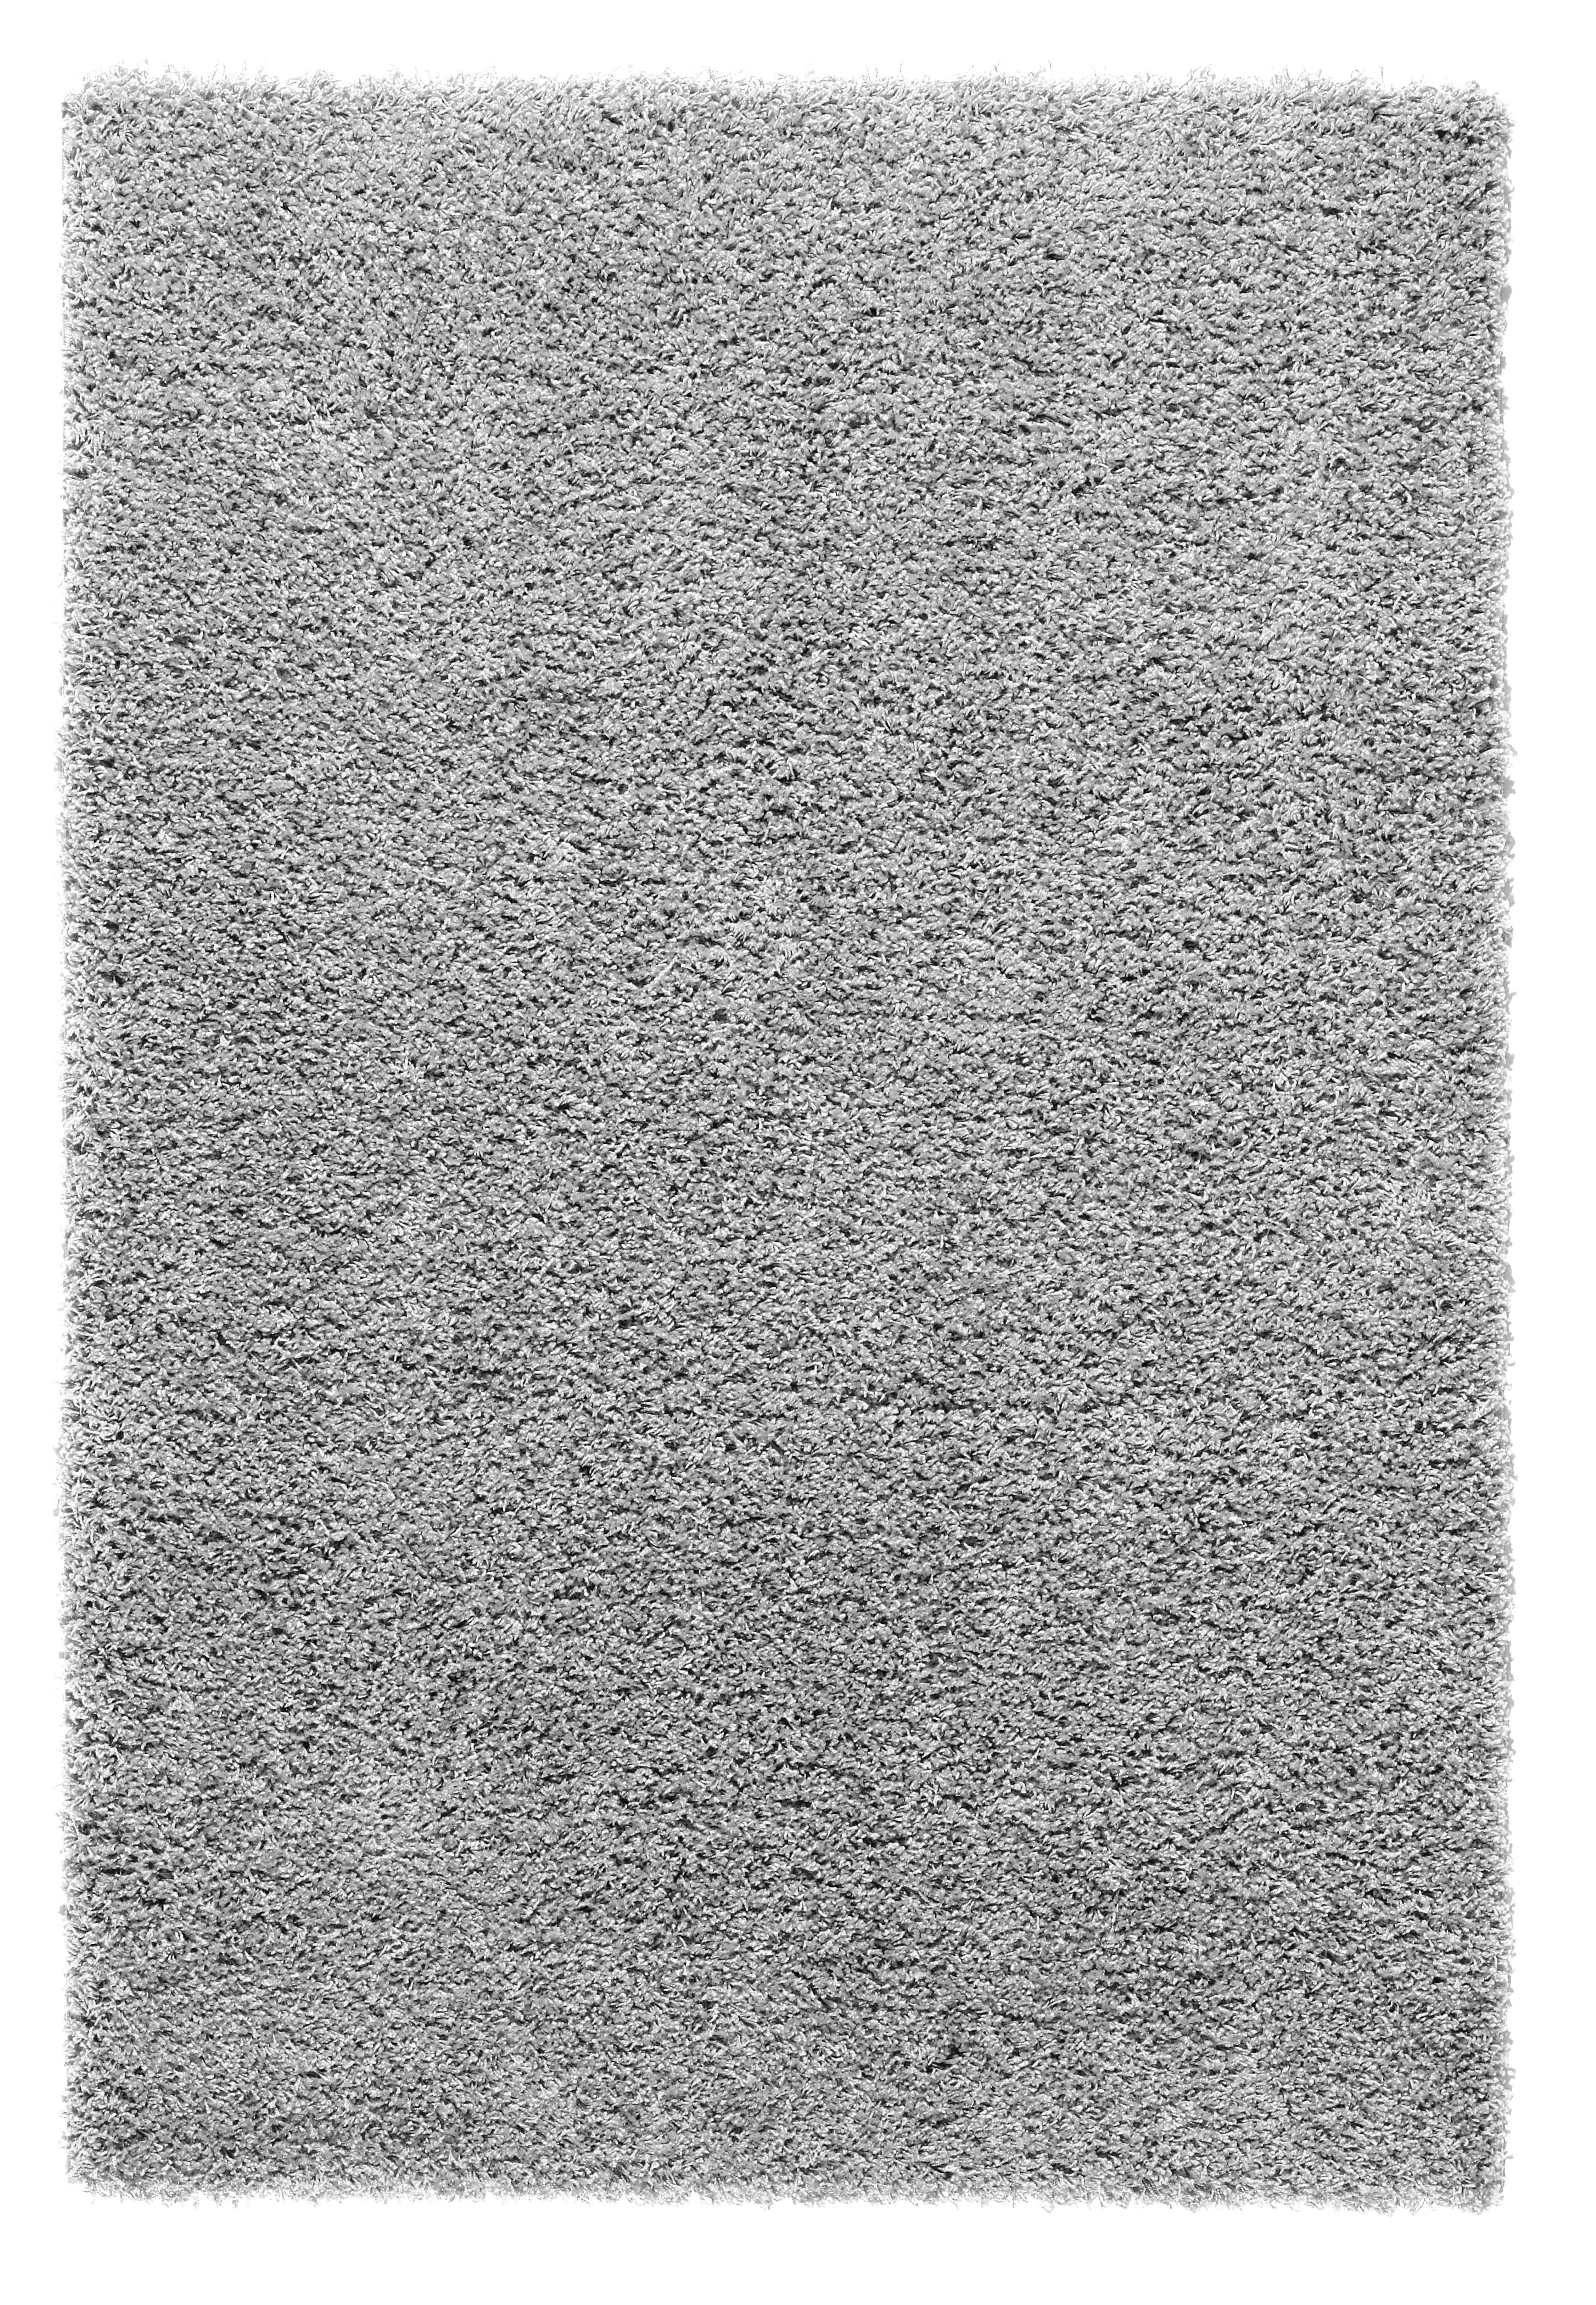 WEBTEPPICH  60/110 cm  Silberfarben   - Silberfarben, Basics, Textil (60/110cm) - Boxxx